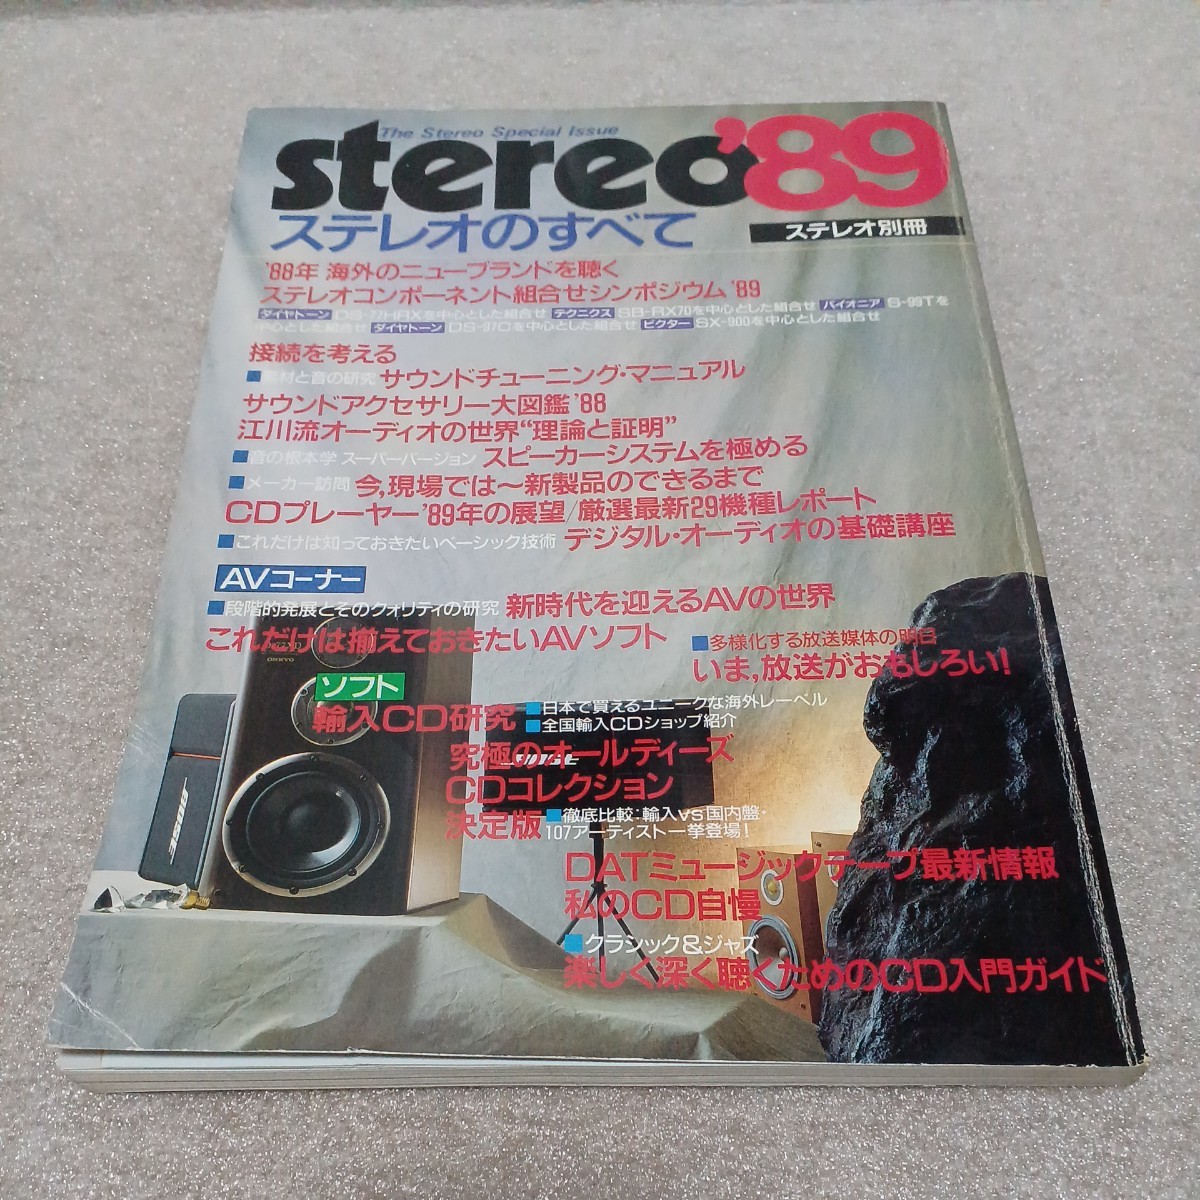  stereo. all \'89 stereo separate volume Showa era 63 year 